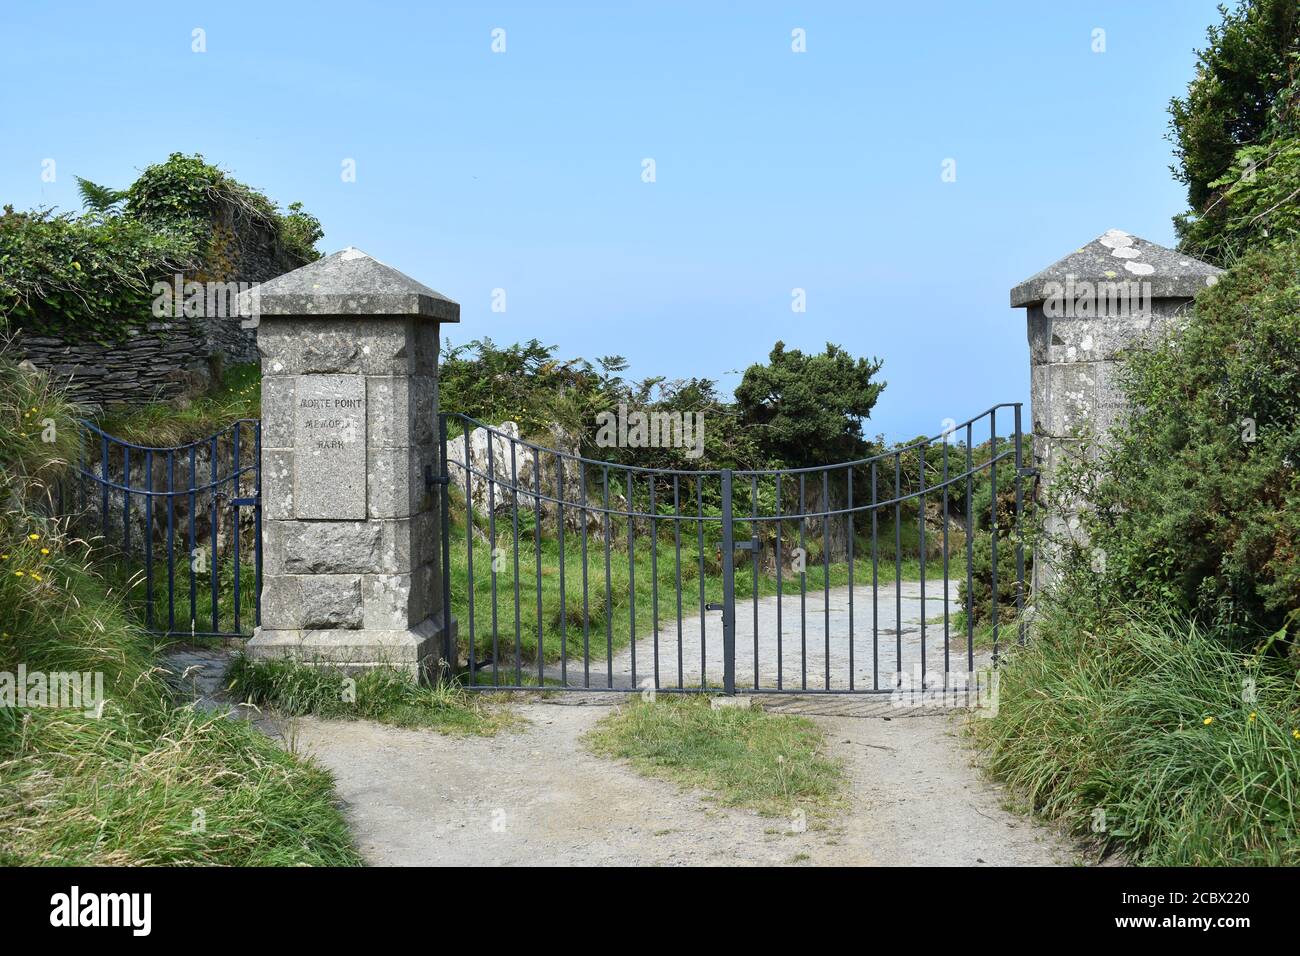 Summer 2020. Entrance Gates To Morte Point Memorial Park, Mortehoe, North Devon, England Stock Photo